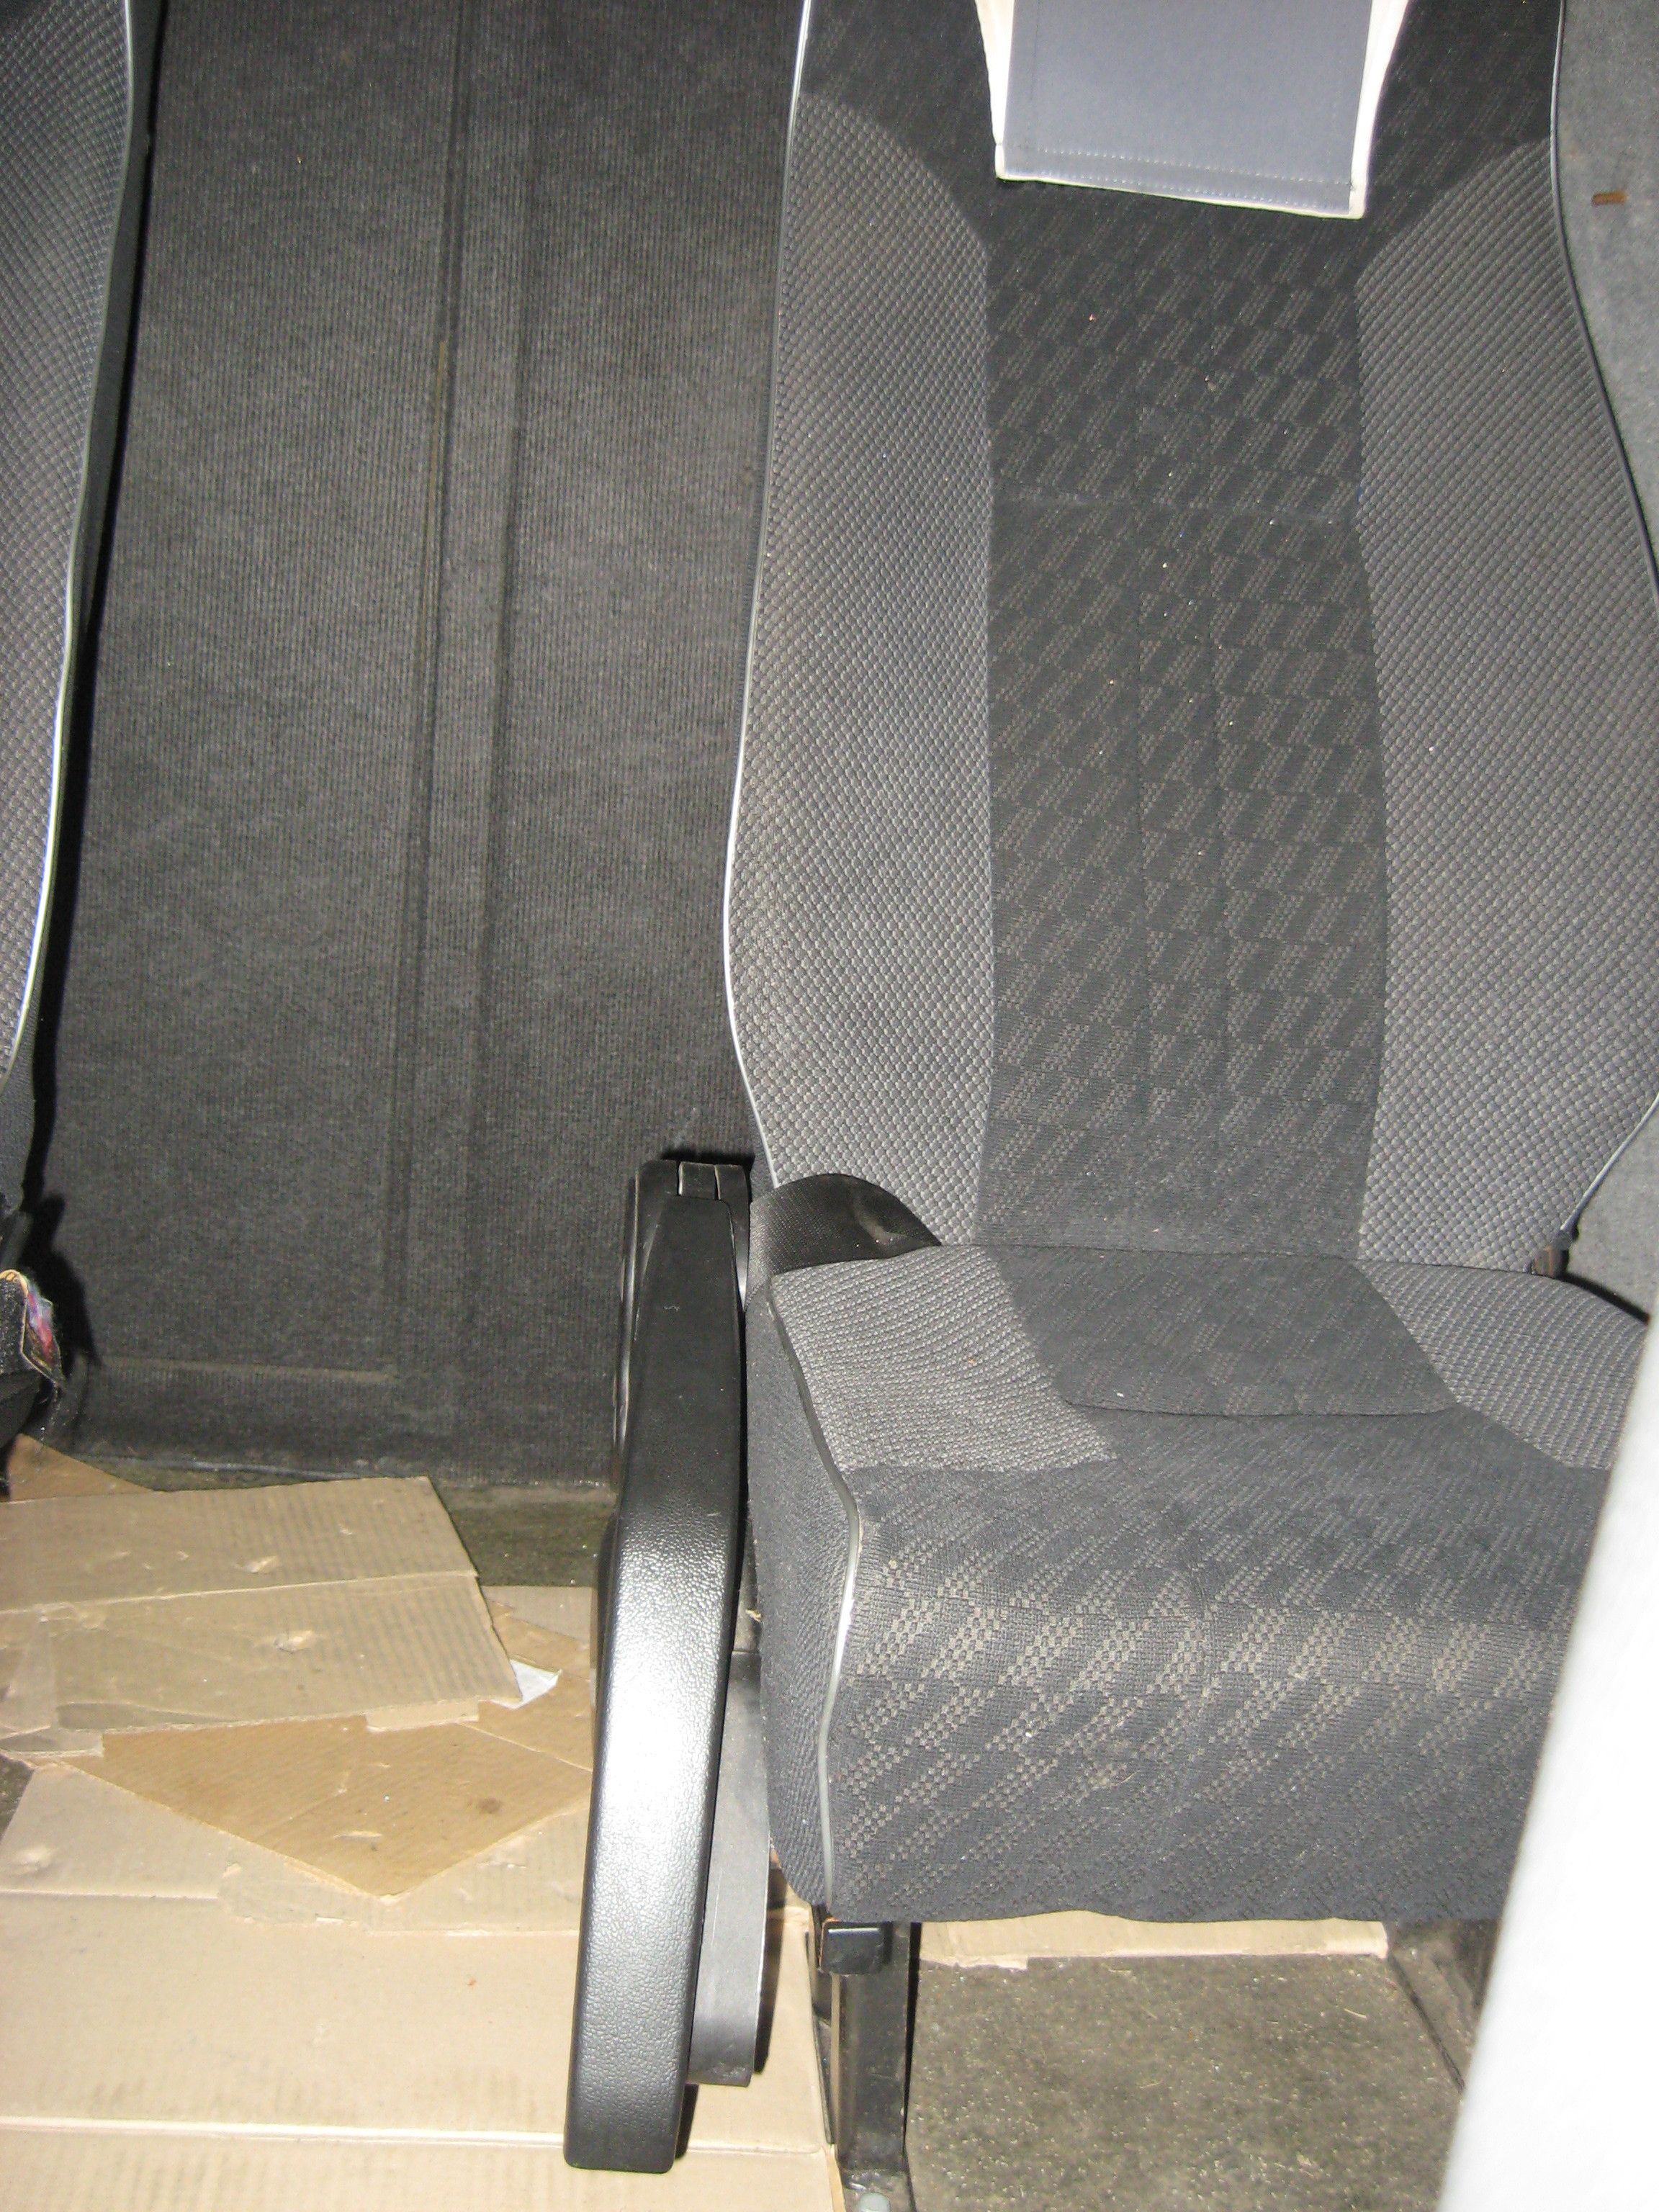 Вантажно -пасажирський VOLKSWAGEN CADDY, рік випуску – 2011, номер шасі, кузова WV1ZZZ2KZCX067957, номер державної реєстрації АЕ2774ЕТ